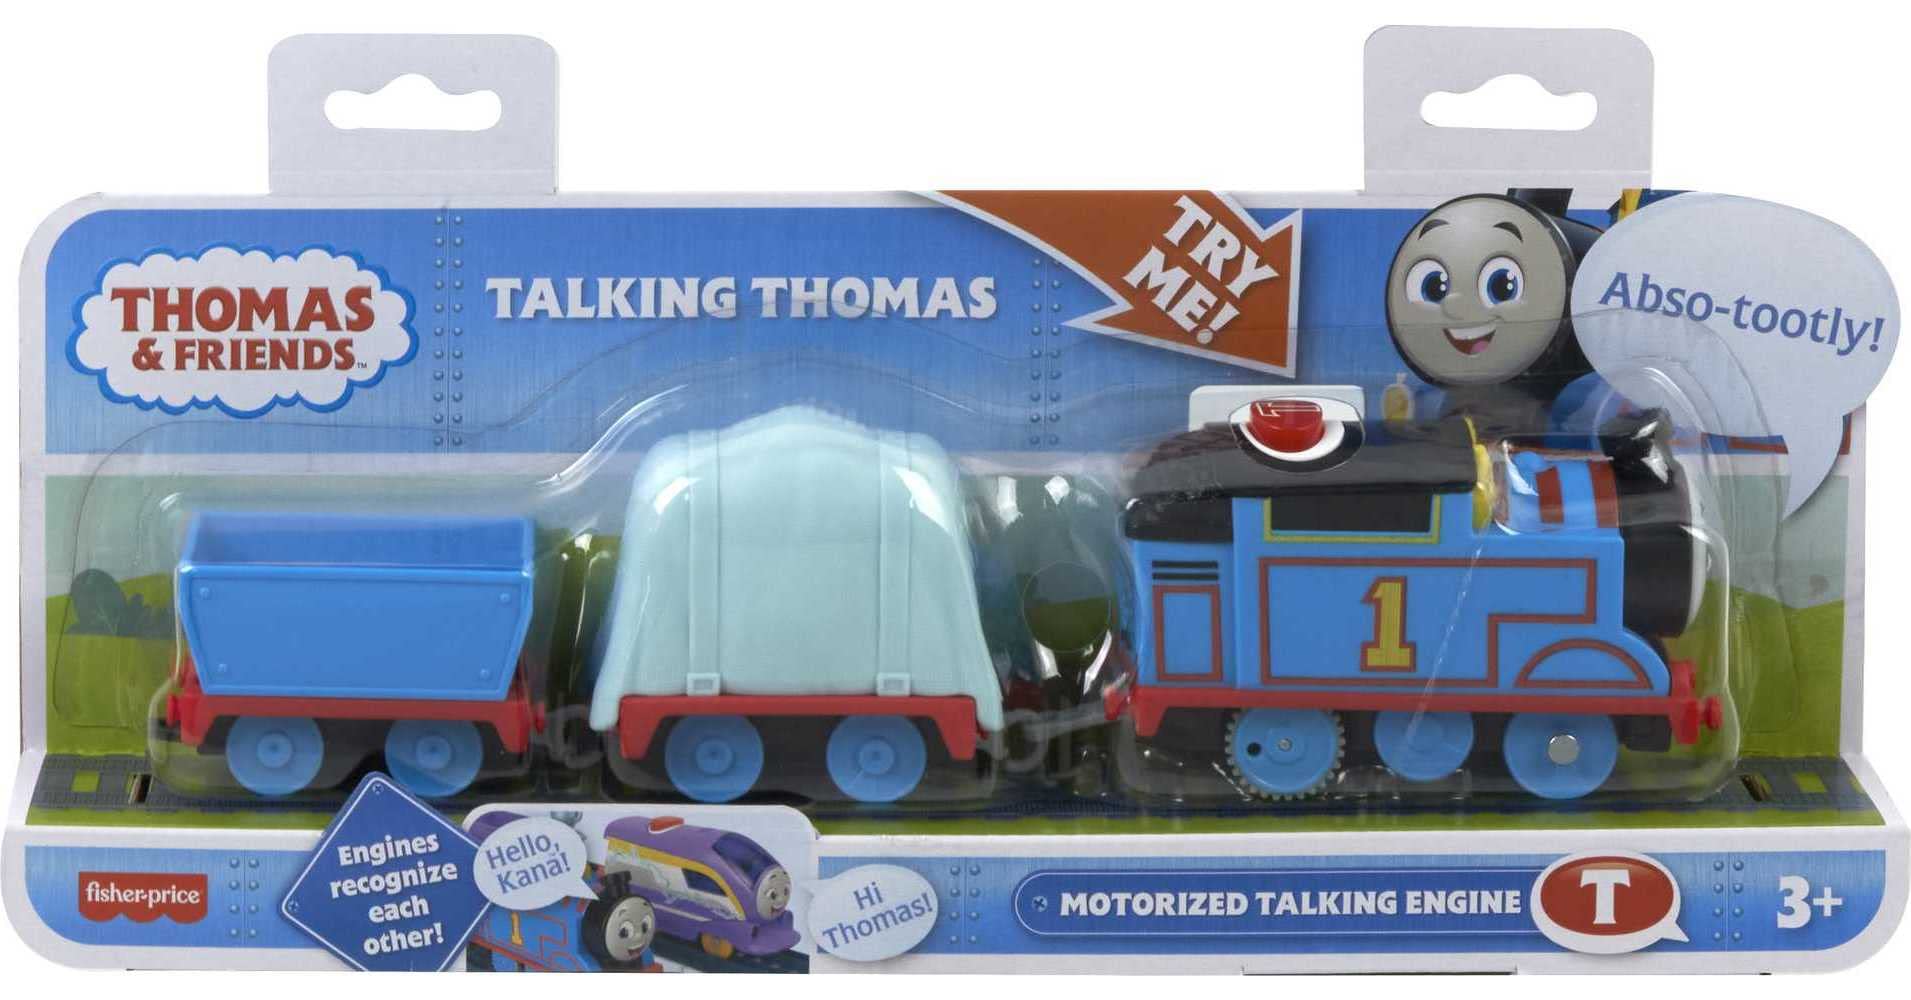 Thomas & friends Motorized Talking Thomas